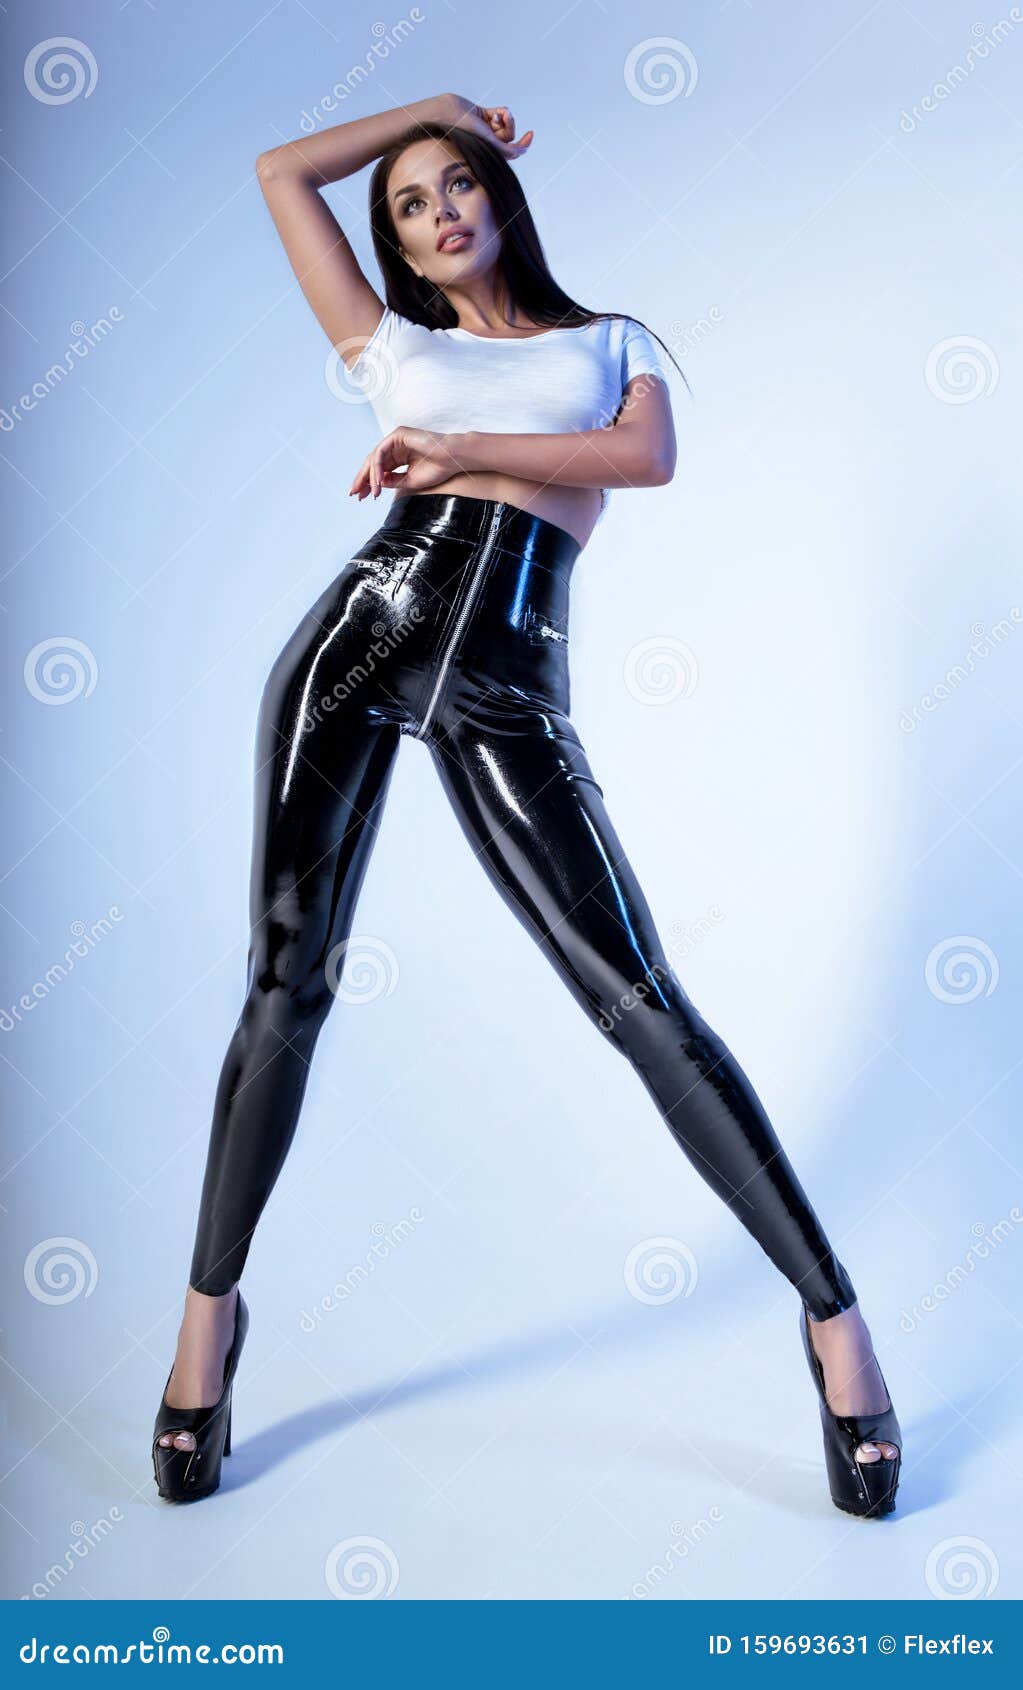 Brunette Woman in White Top and Vinyl Leggings Stock Image - Image